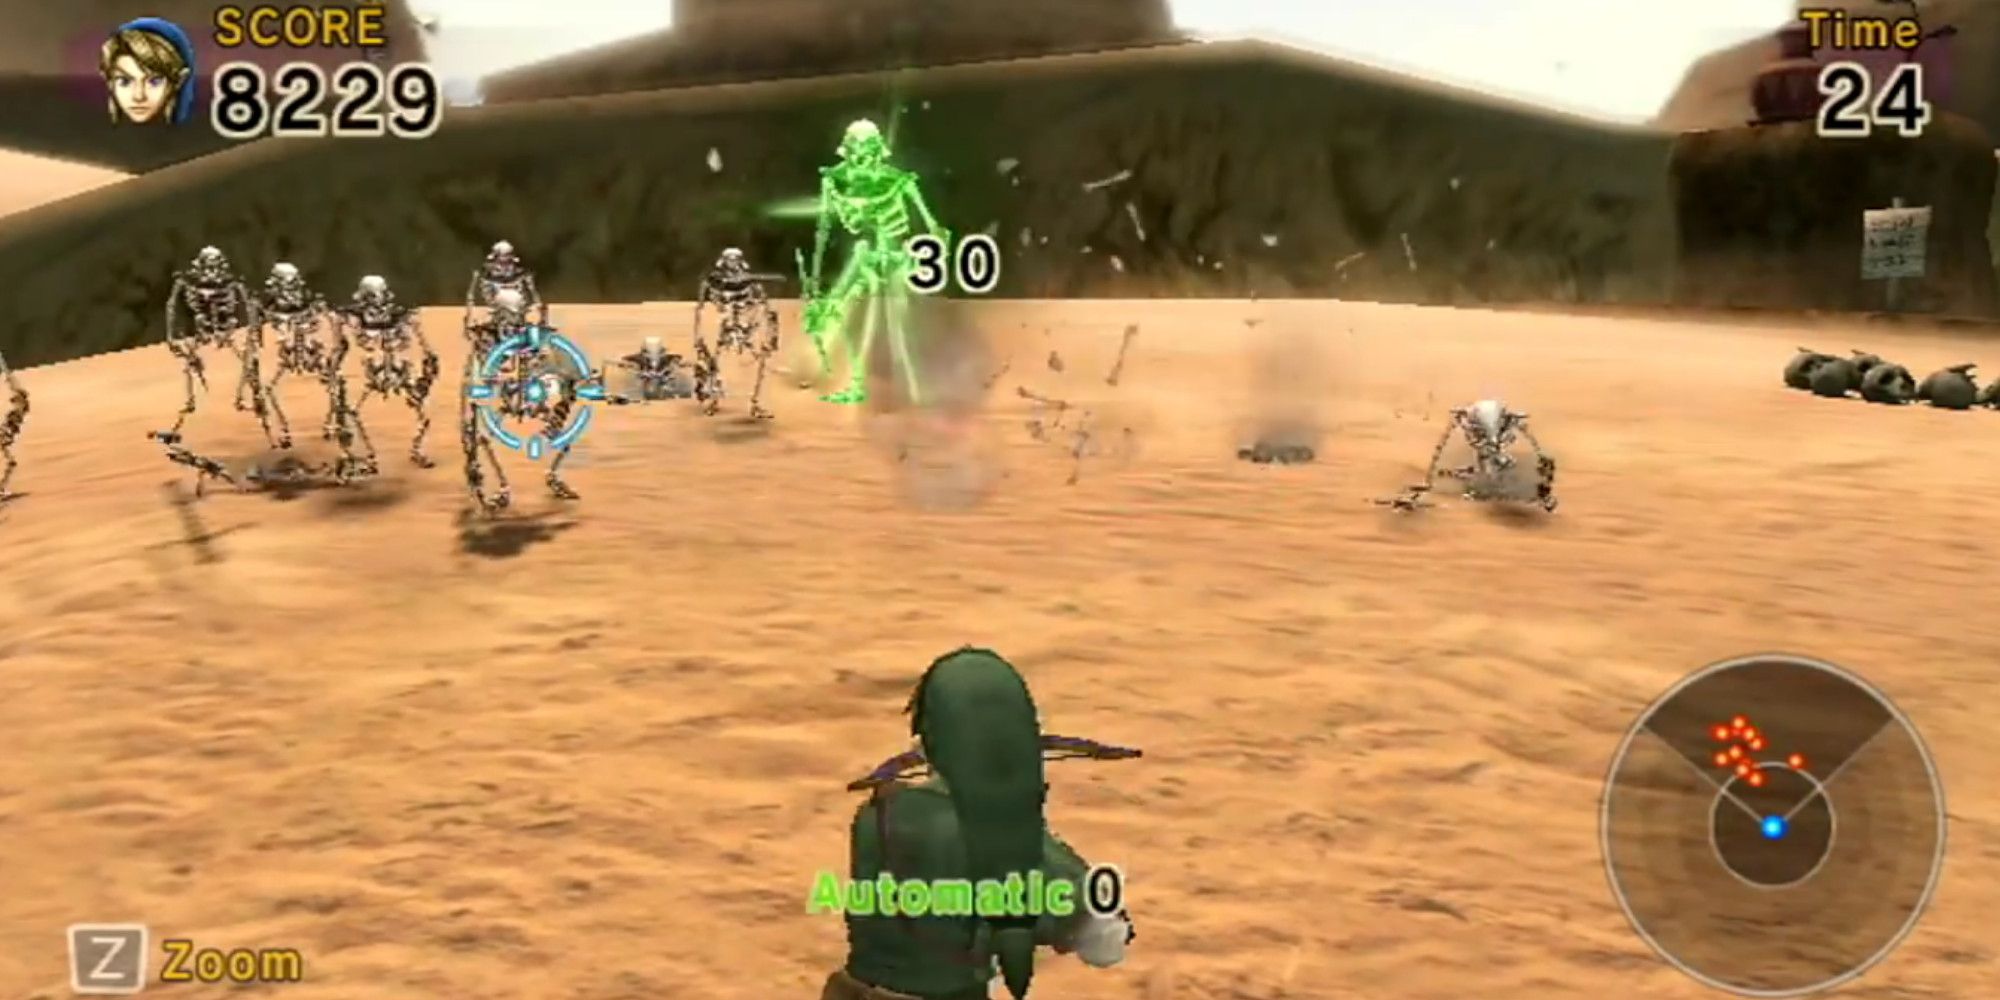 Link firing at skeletons in Link's Crossbow Training